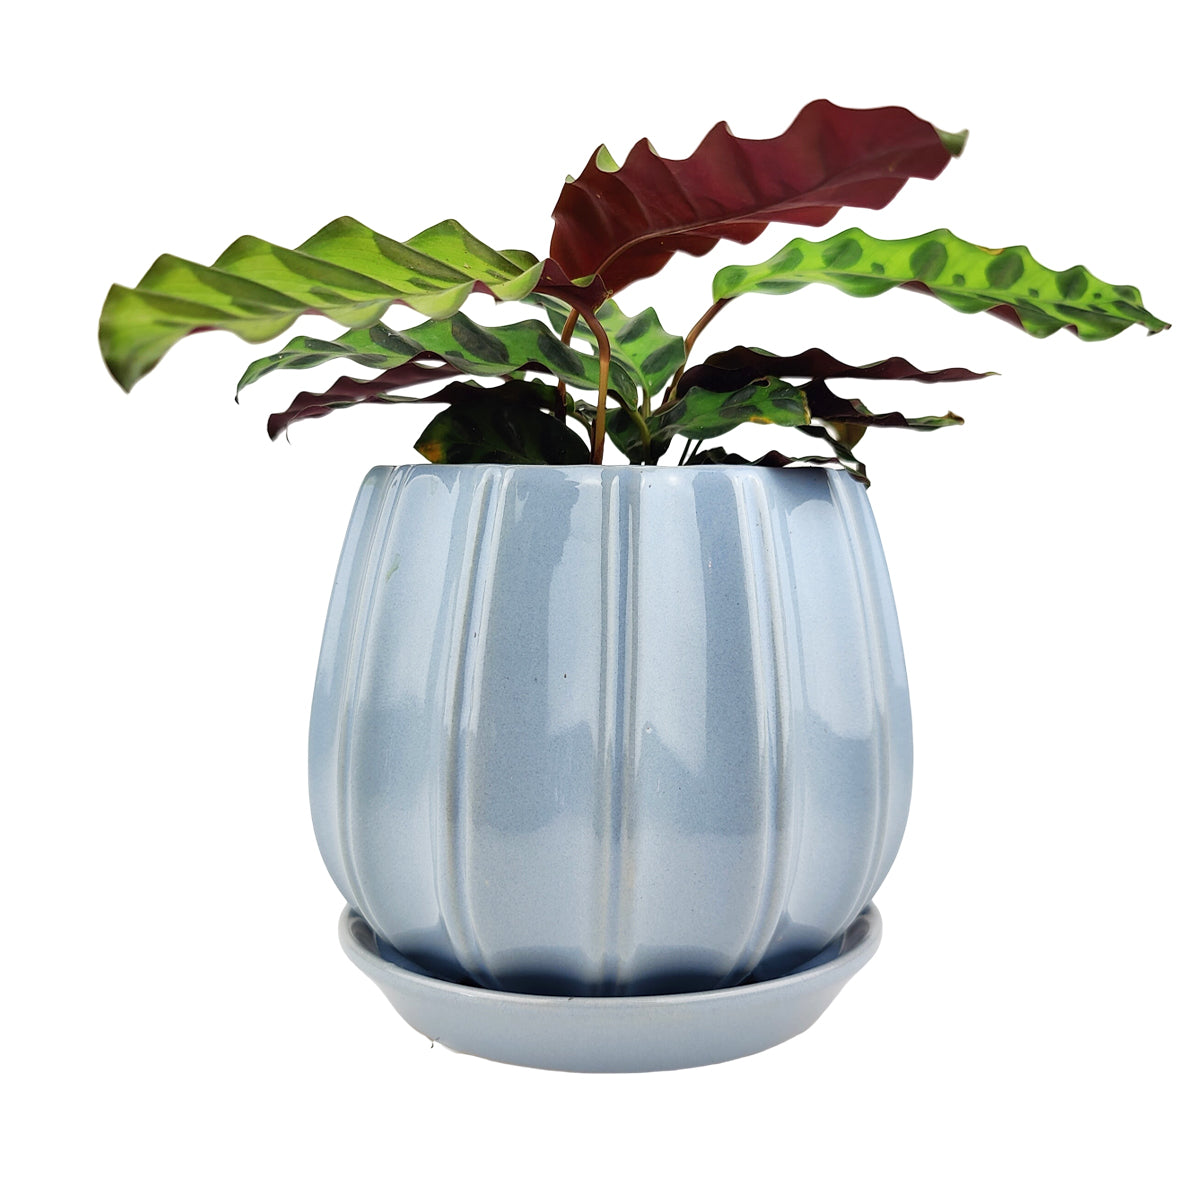 ceramic planter, large ceramic plant for indoor houseplant, glazed ceramic planter, ceramic planter with saucer, 6 inch planter